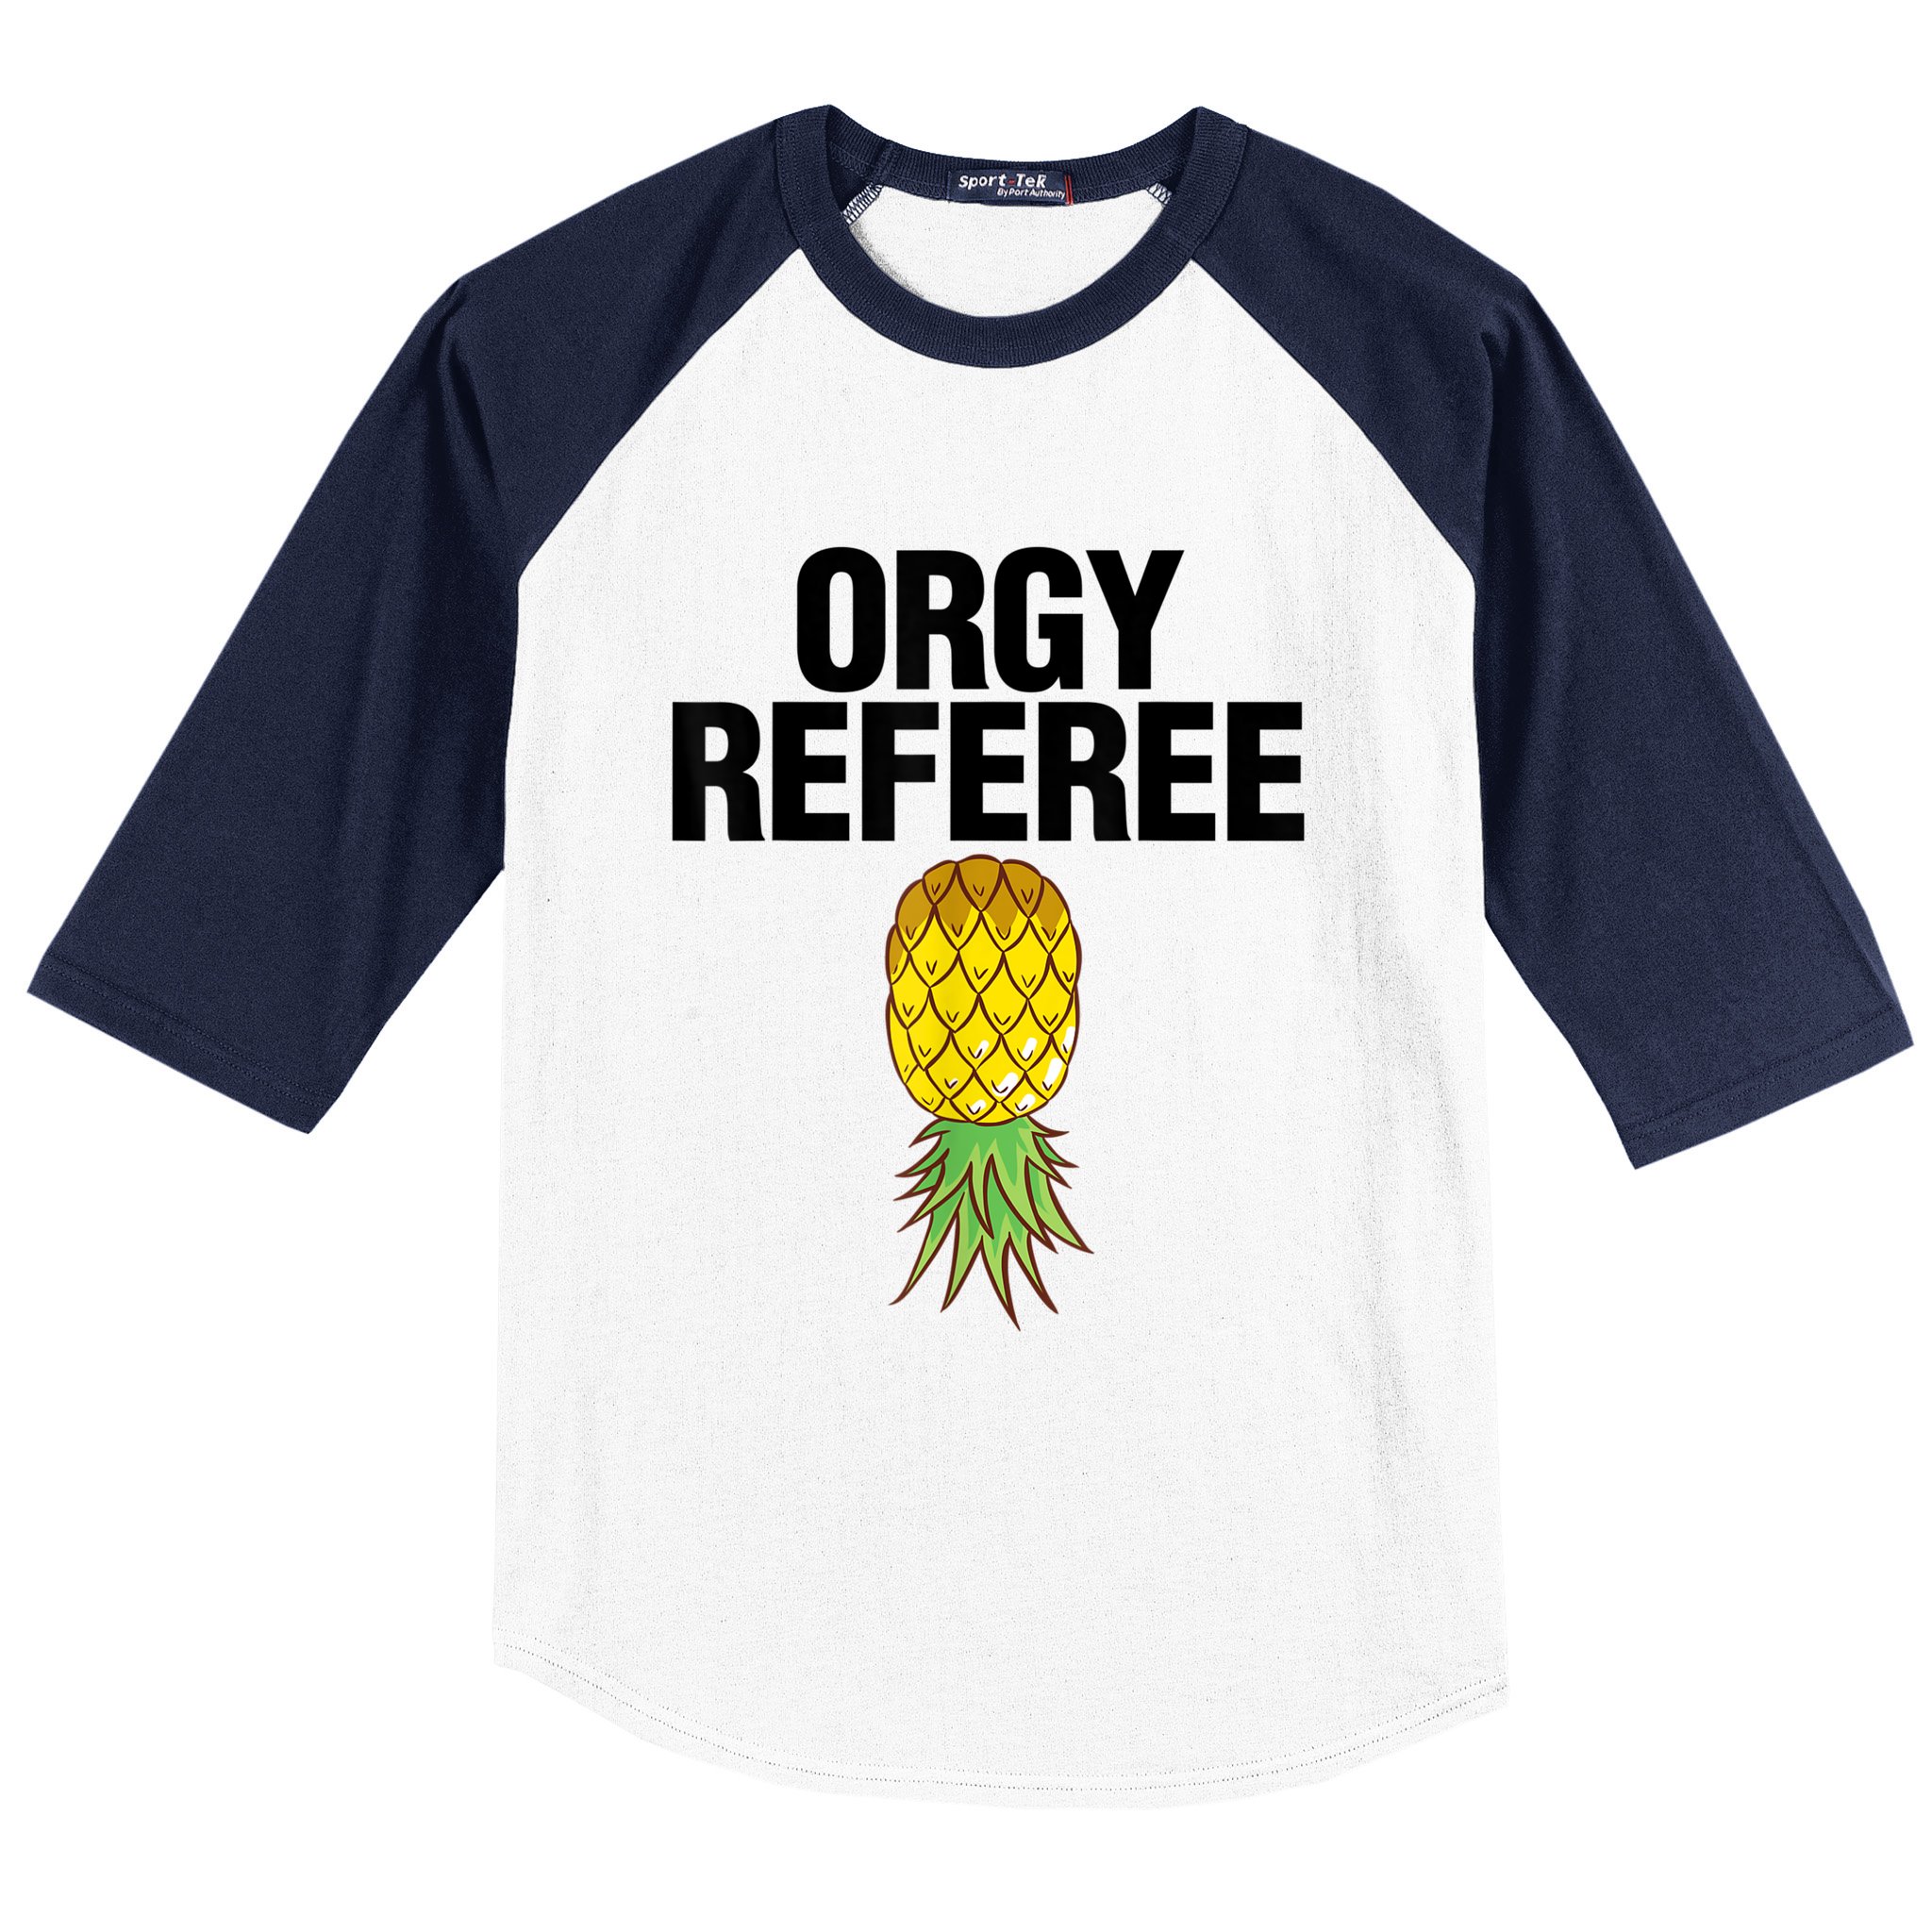 Orgy Referee Adult Humor Swinger Group Sex Freak Gift Baseball Sleeve Shirt TeeShirtPalace